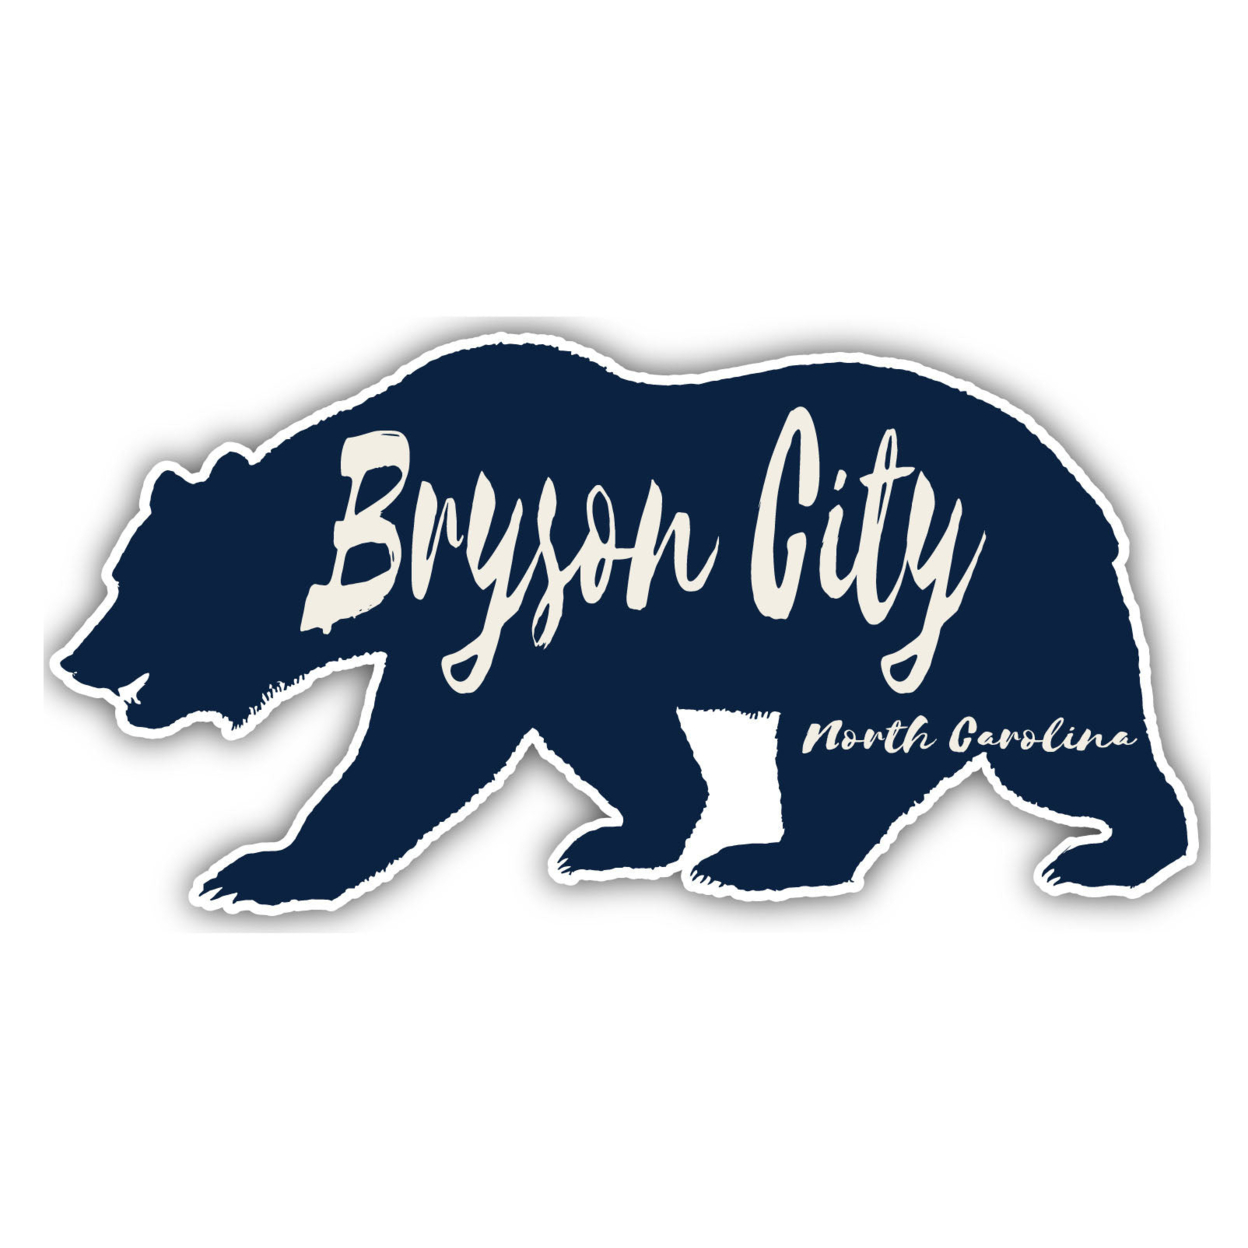 Bryson City North Carolina Souvenir Decorative Stickers (Choose Theme And Size) - Single Unit, 4-Inch, Bear